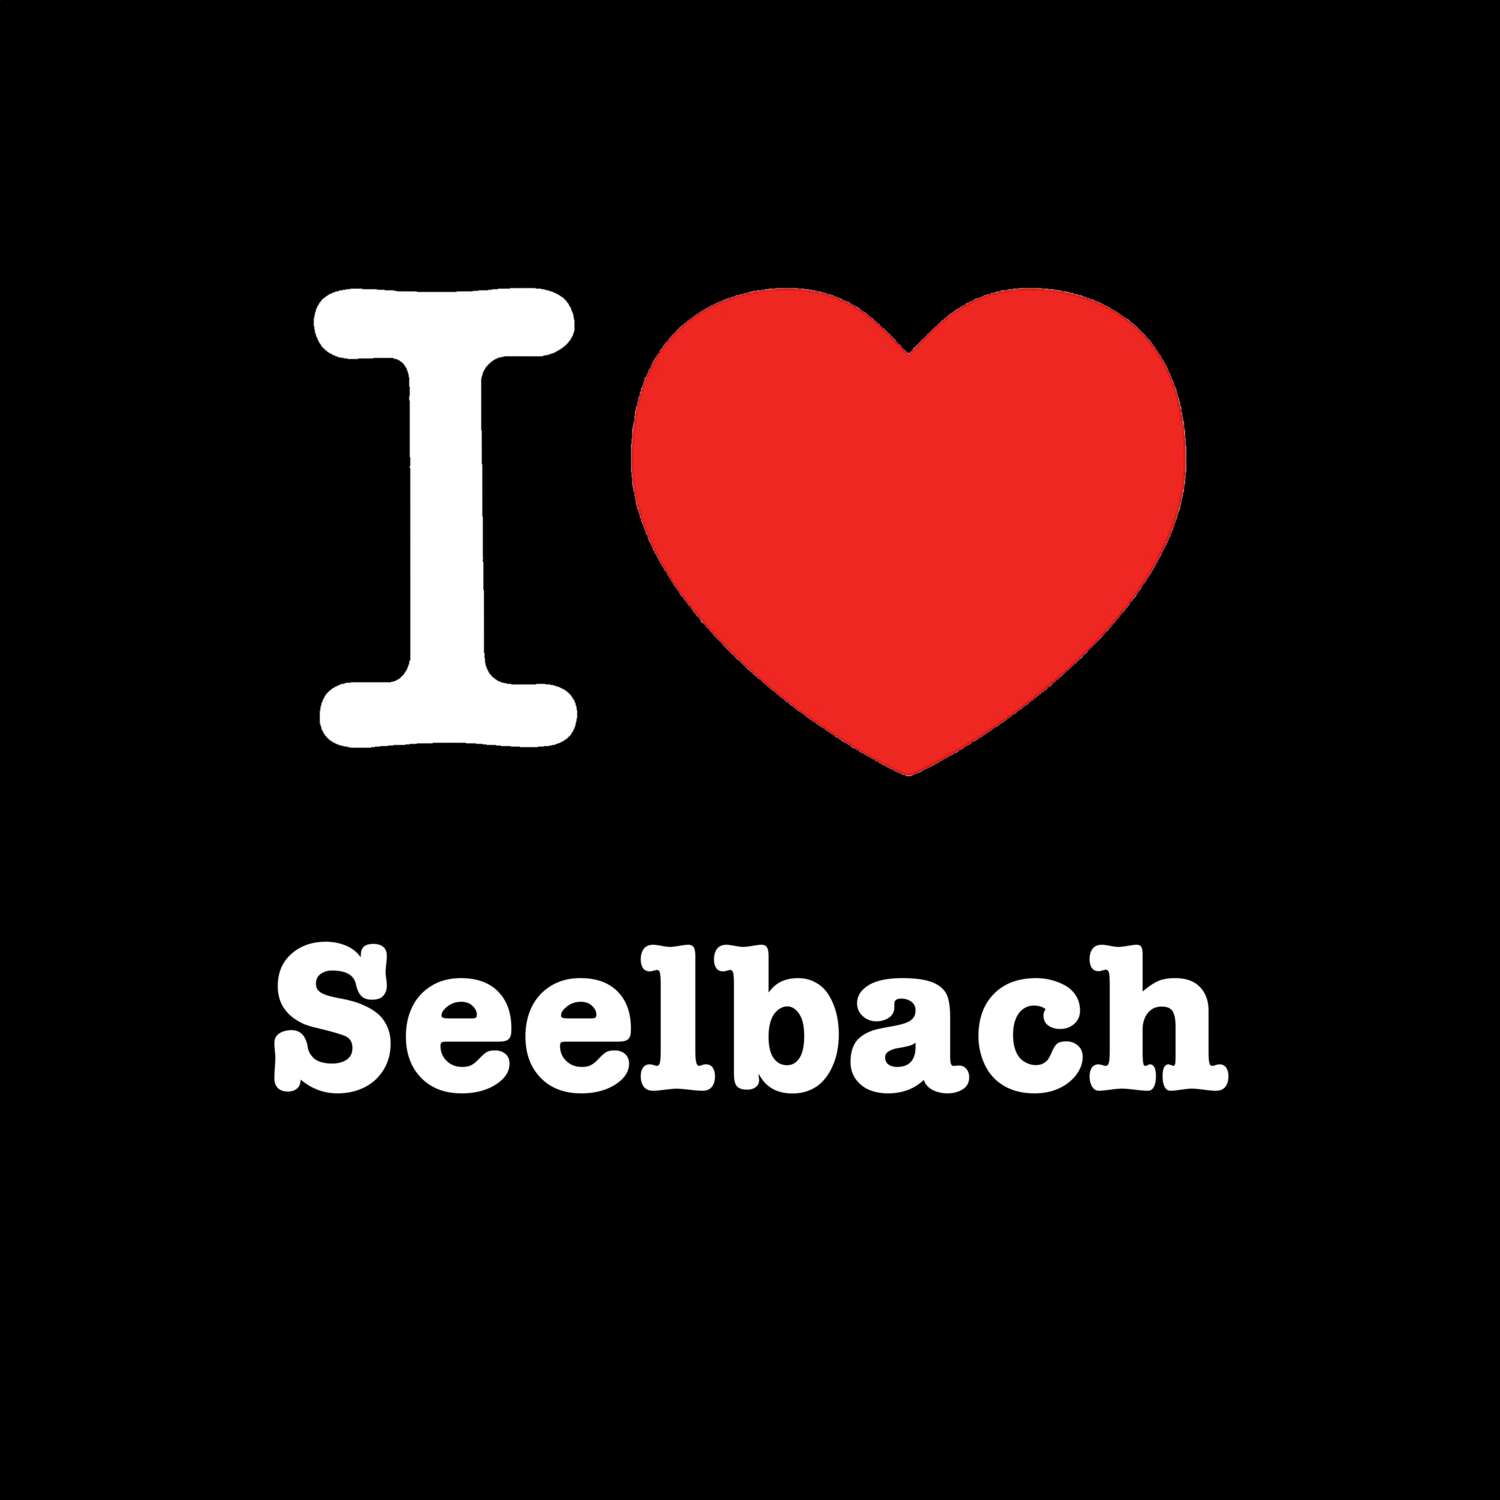 Seelbach T-Shirt »I love«